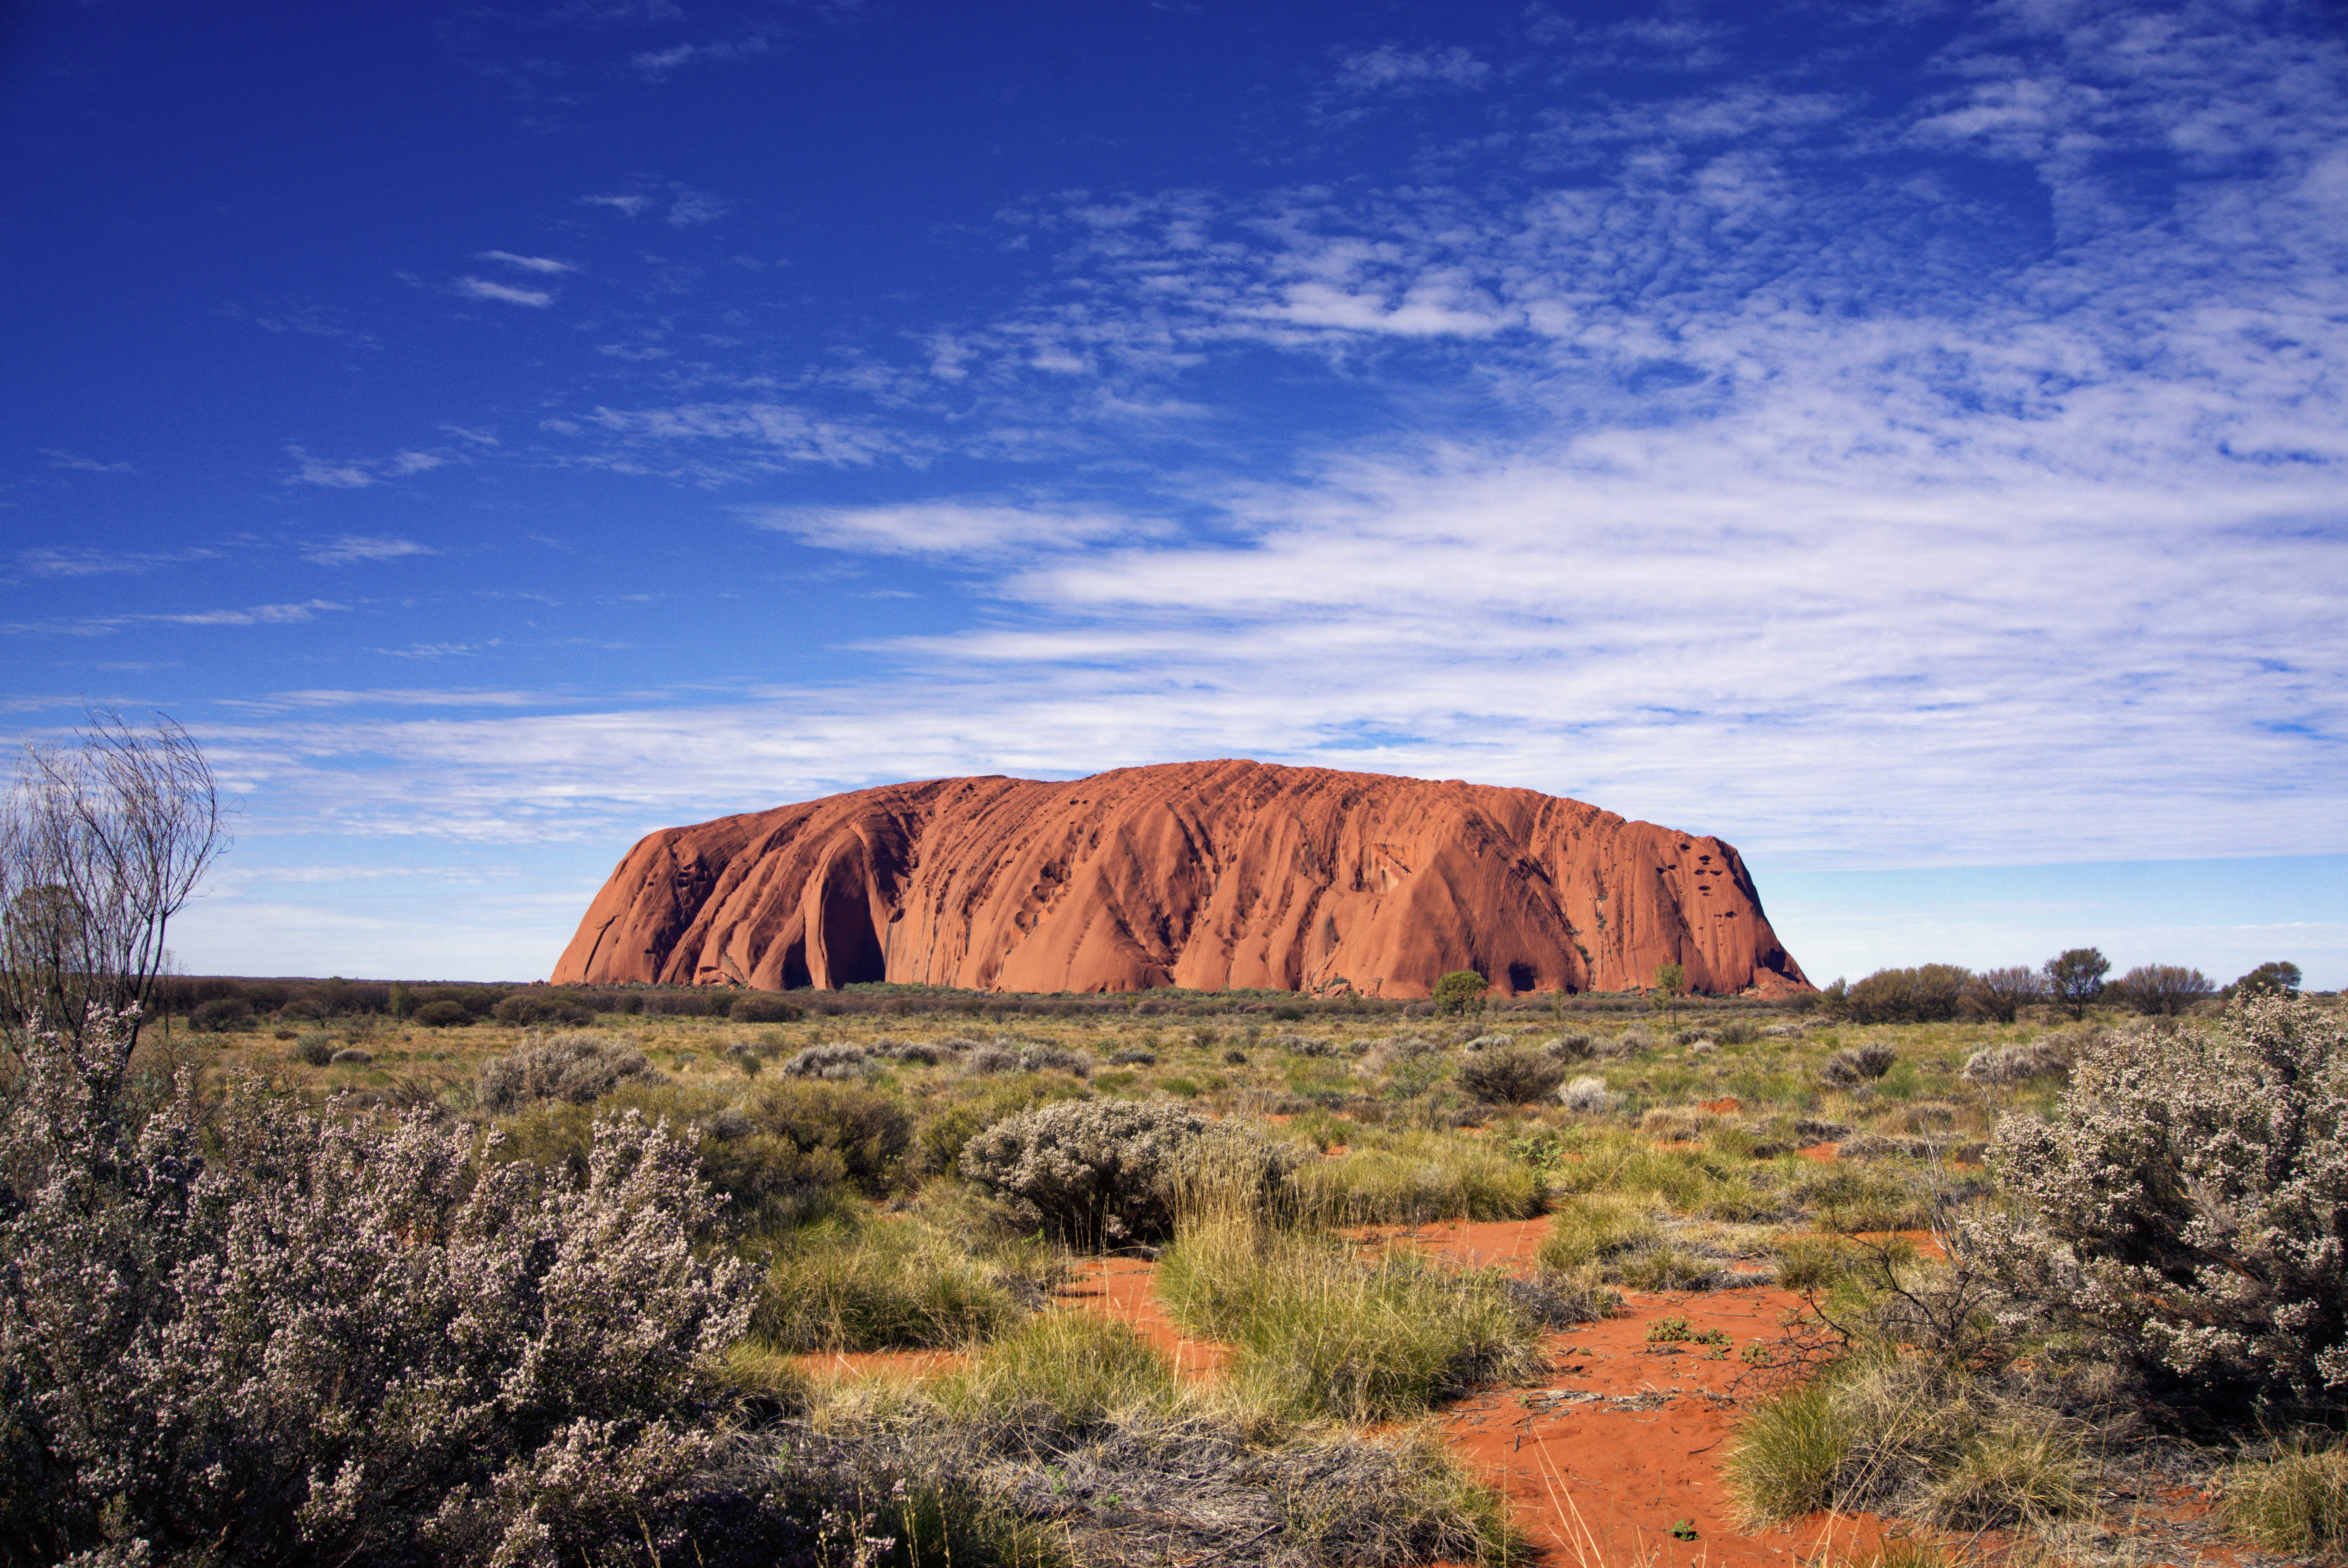 Yes! We captured a perfect classic shot of Uluru!